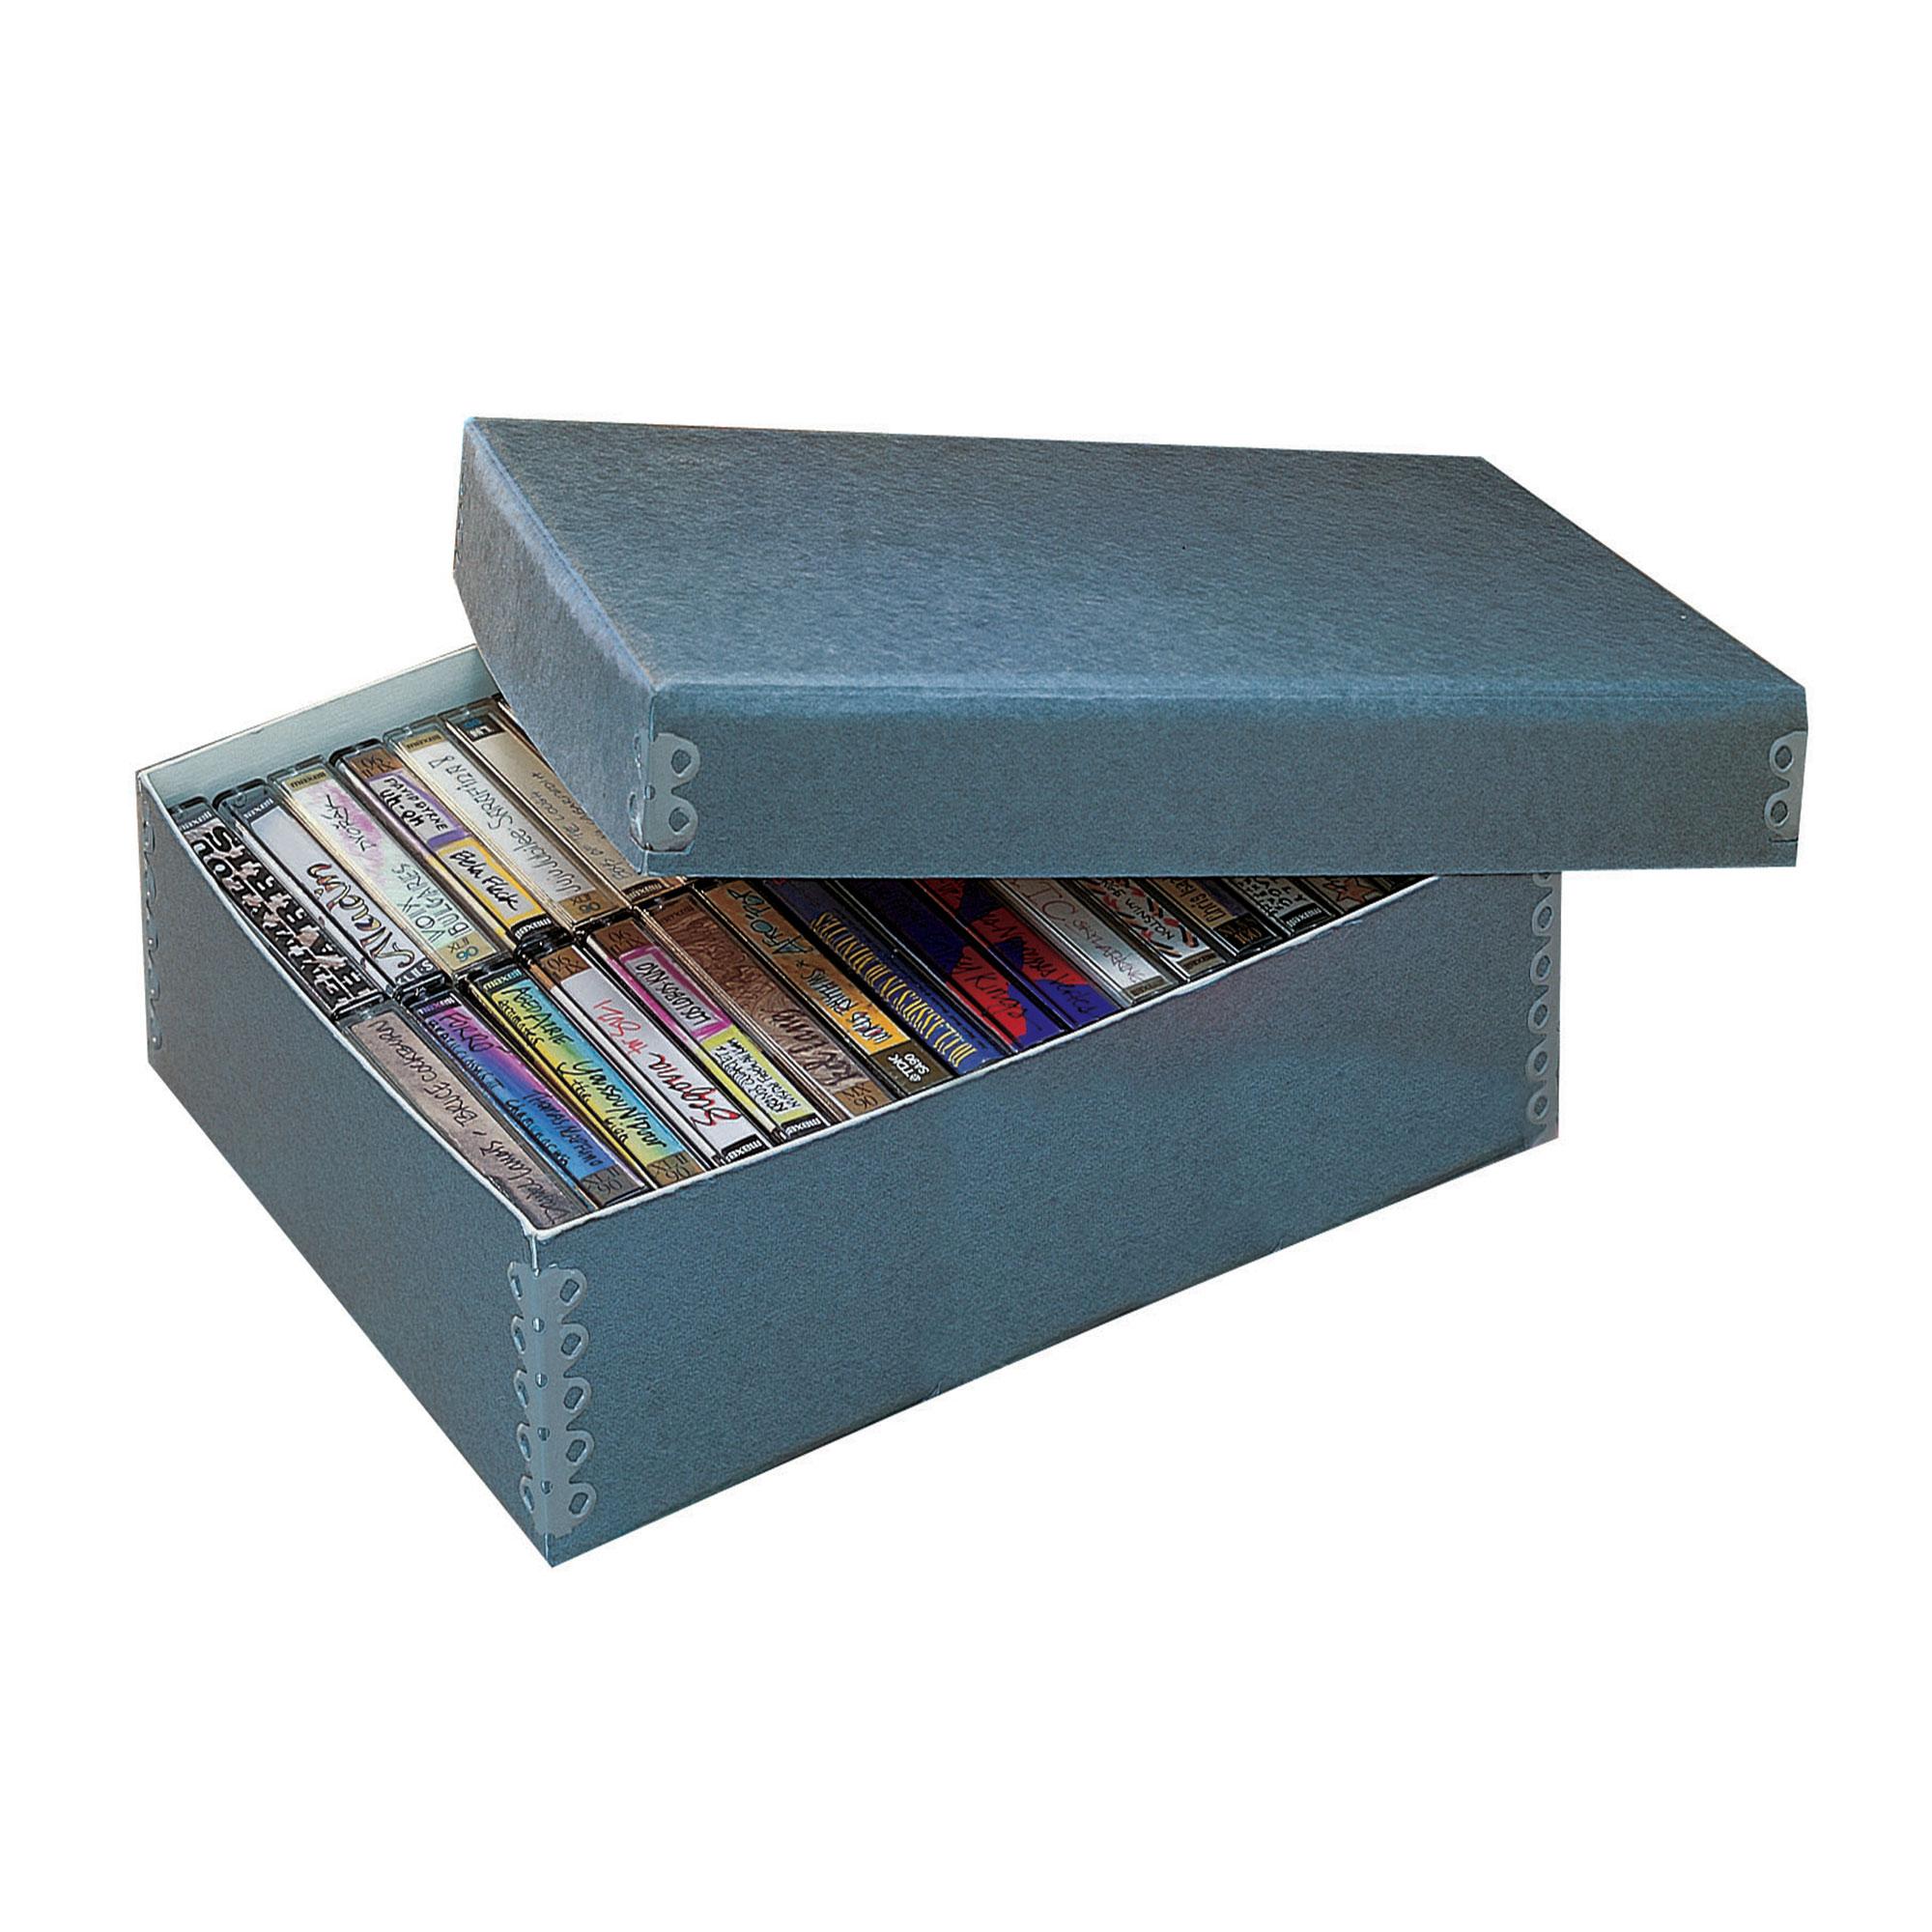 Cassette Tape Storage Box - holds 36